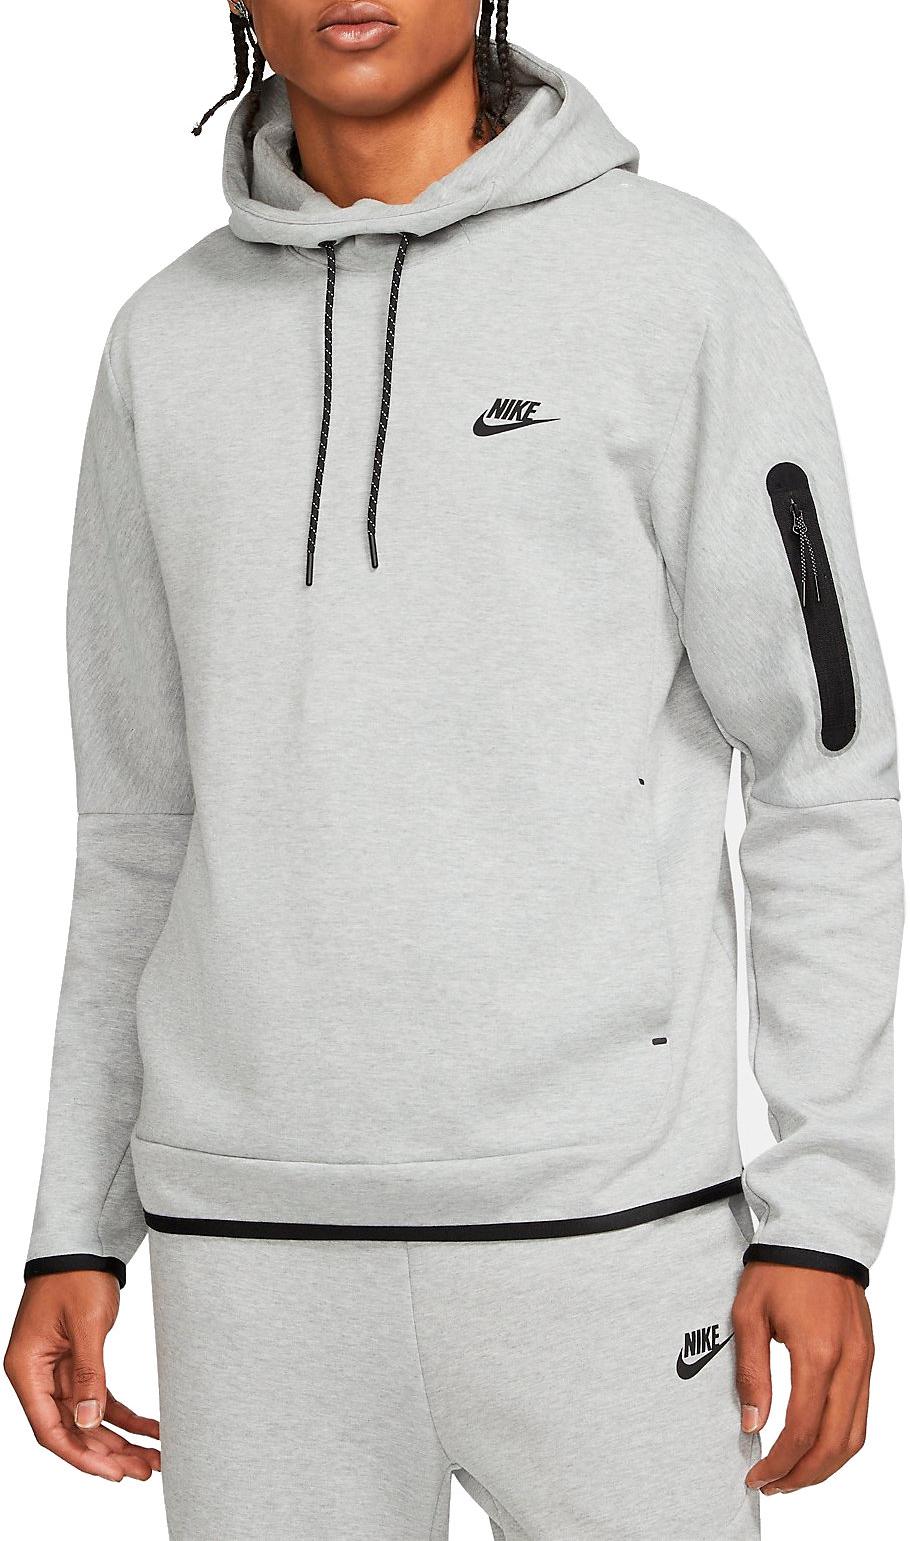 Sweatshirt com capuz Nike Sportswear Tech Fleece Men s Pullover Hoodie